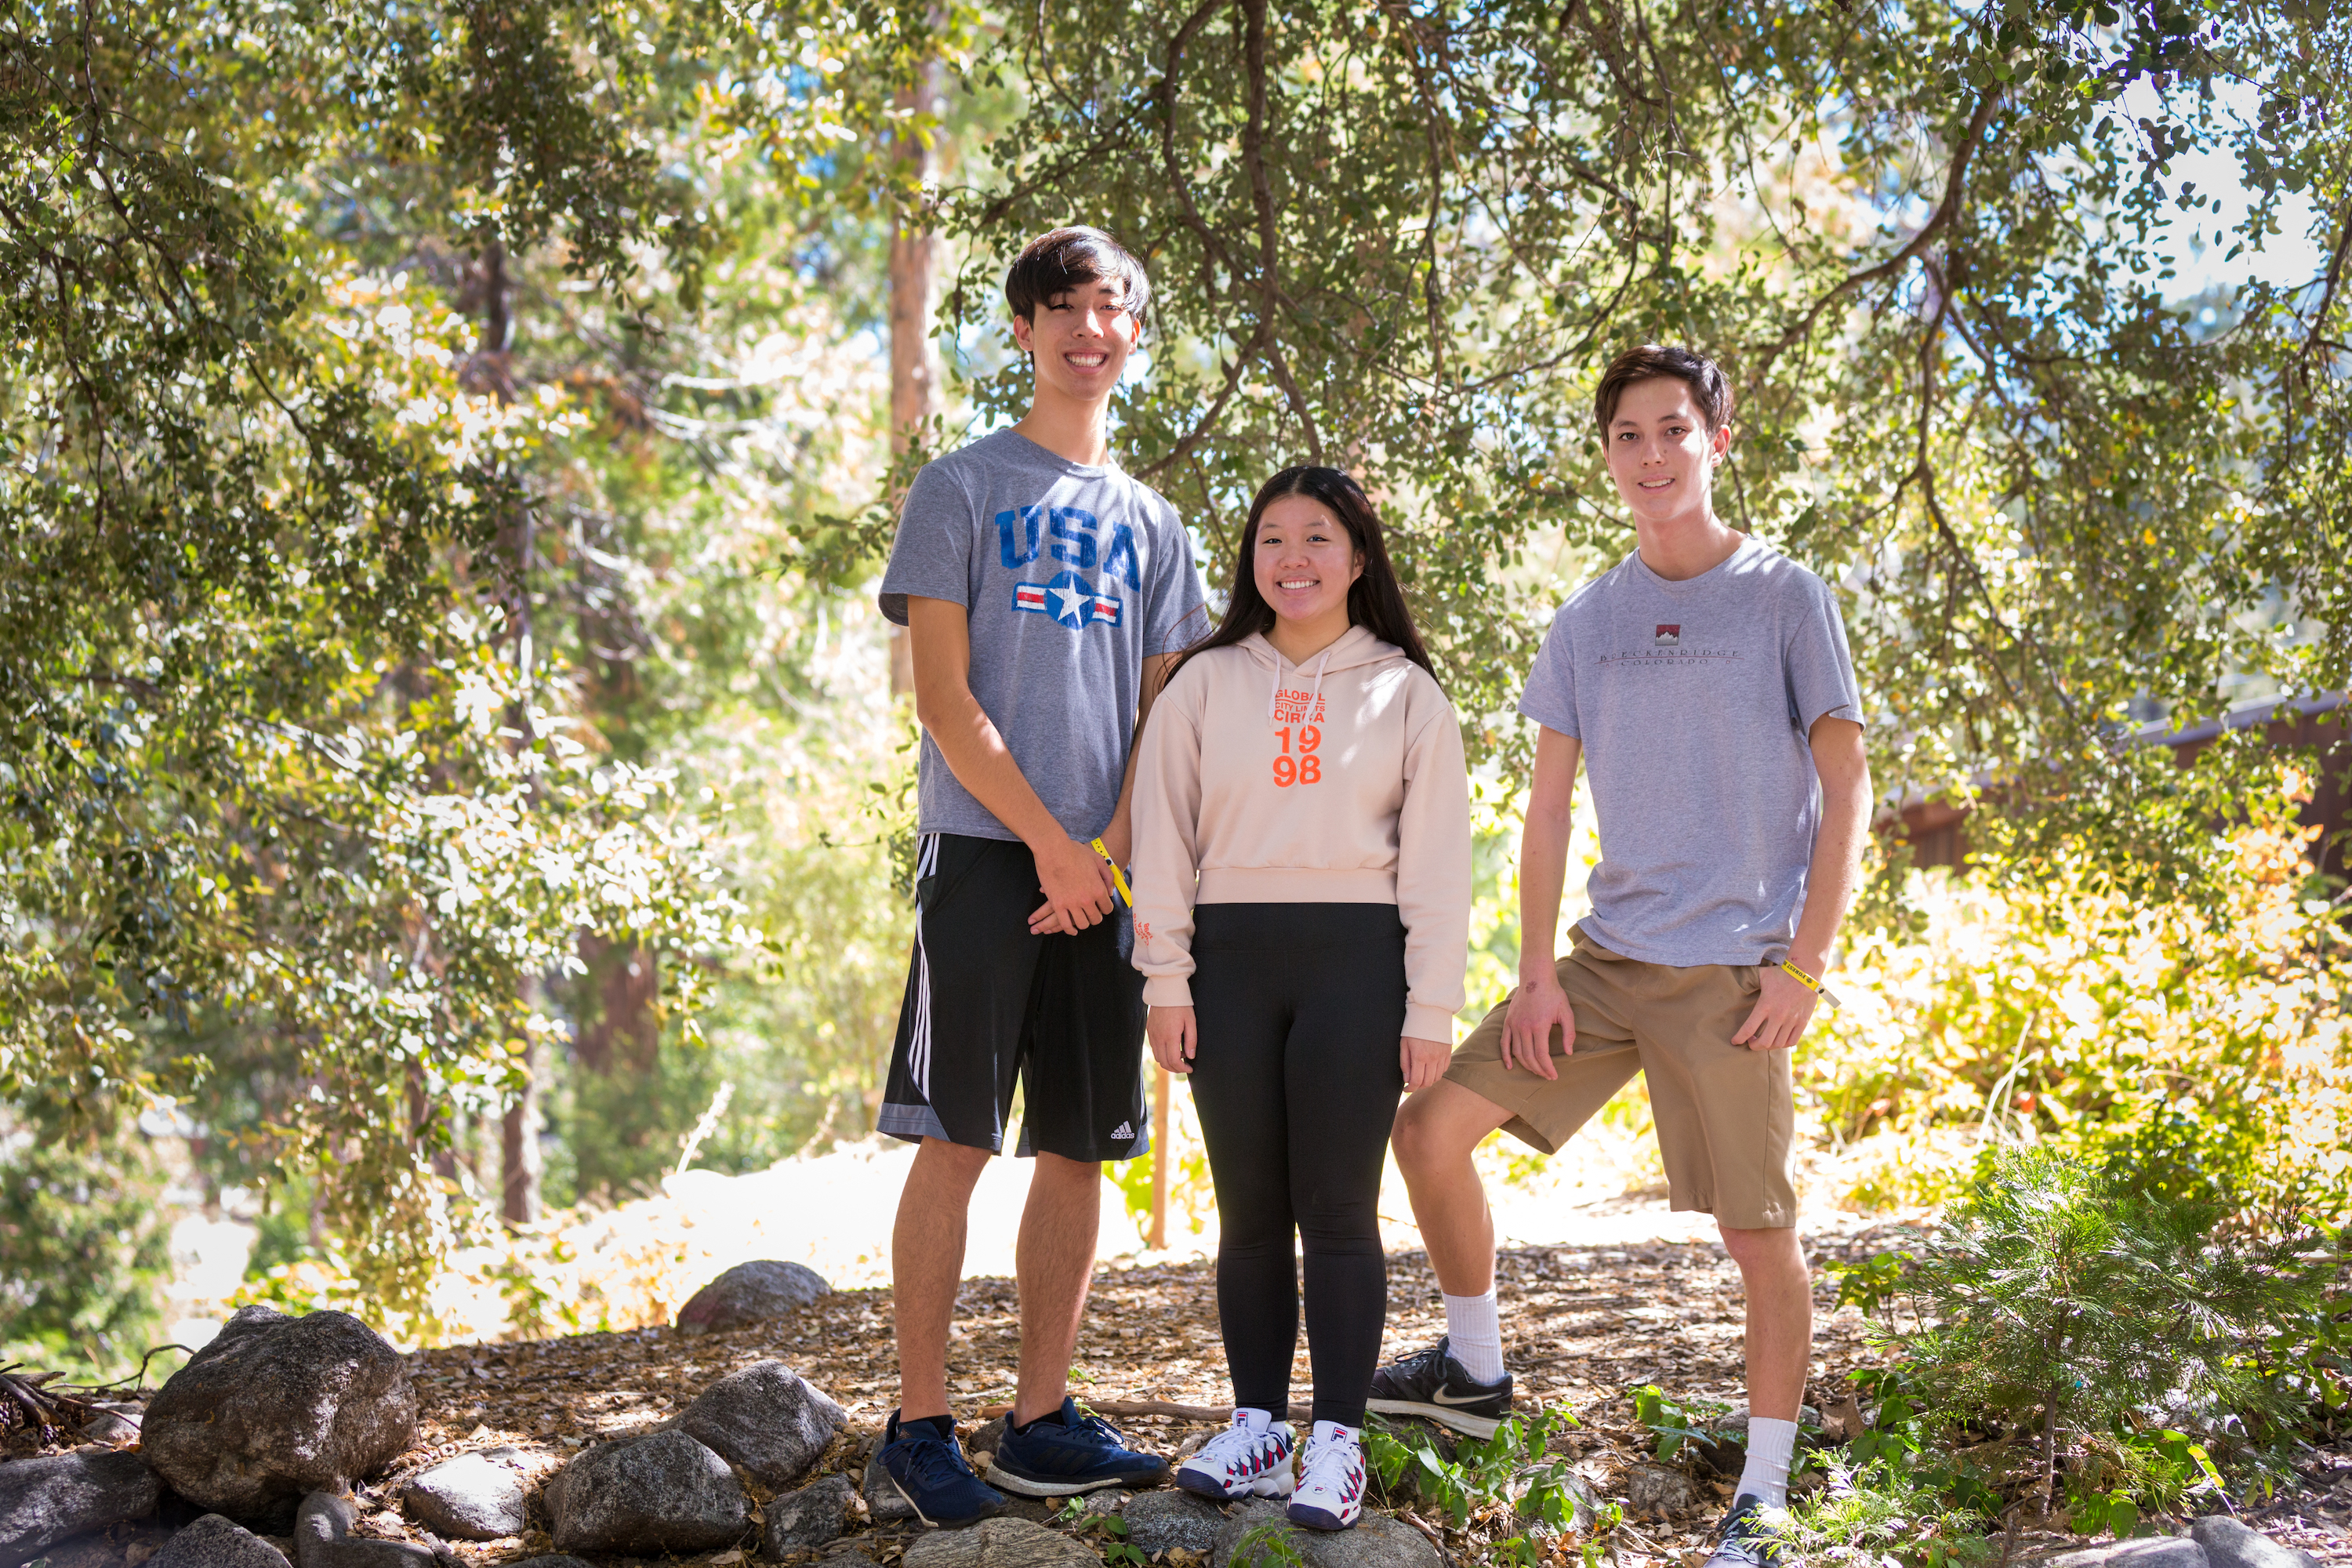 Three presidential scholars enrolled at La Sierra University